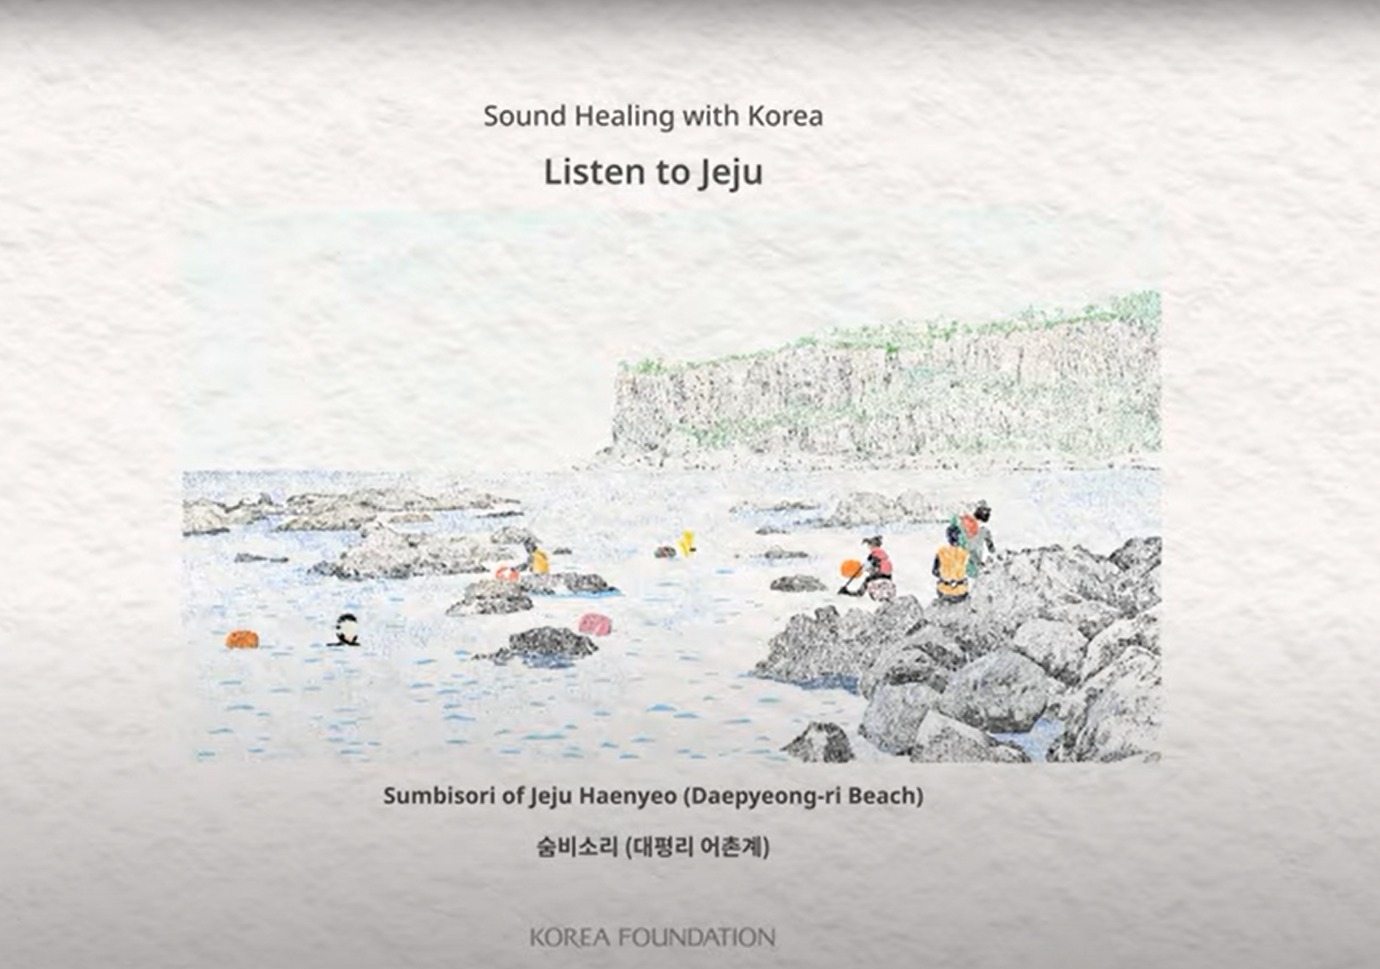 [ASMR] 2021 Sound Healing with Korea - Listen to Jeju | 5. Sumbisori of Jeju Haenyeo